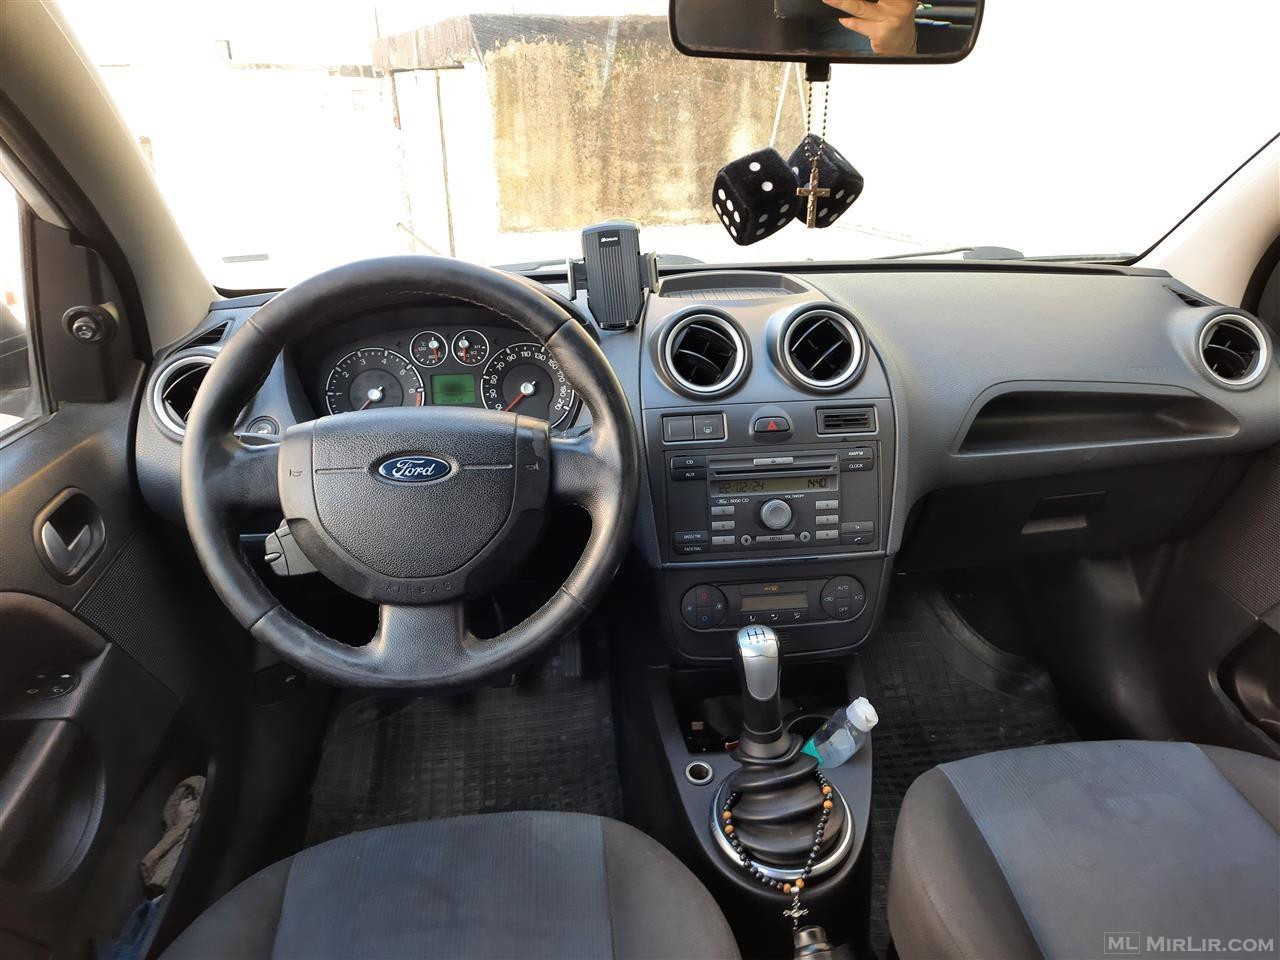 Ford Fiesta 1.25 benzin/gaz